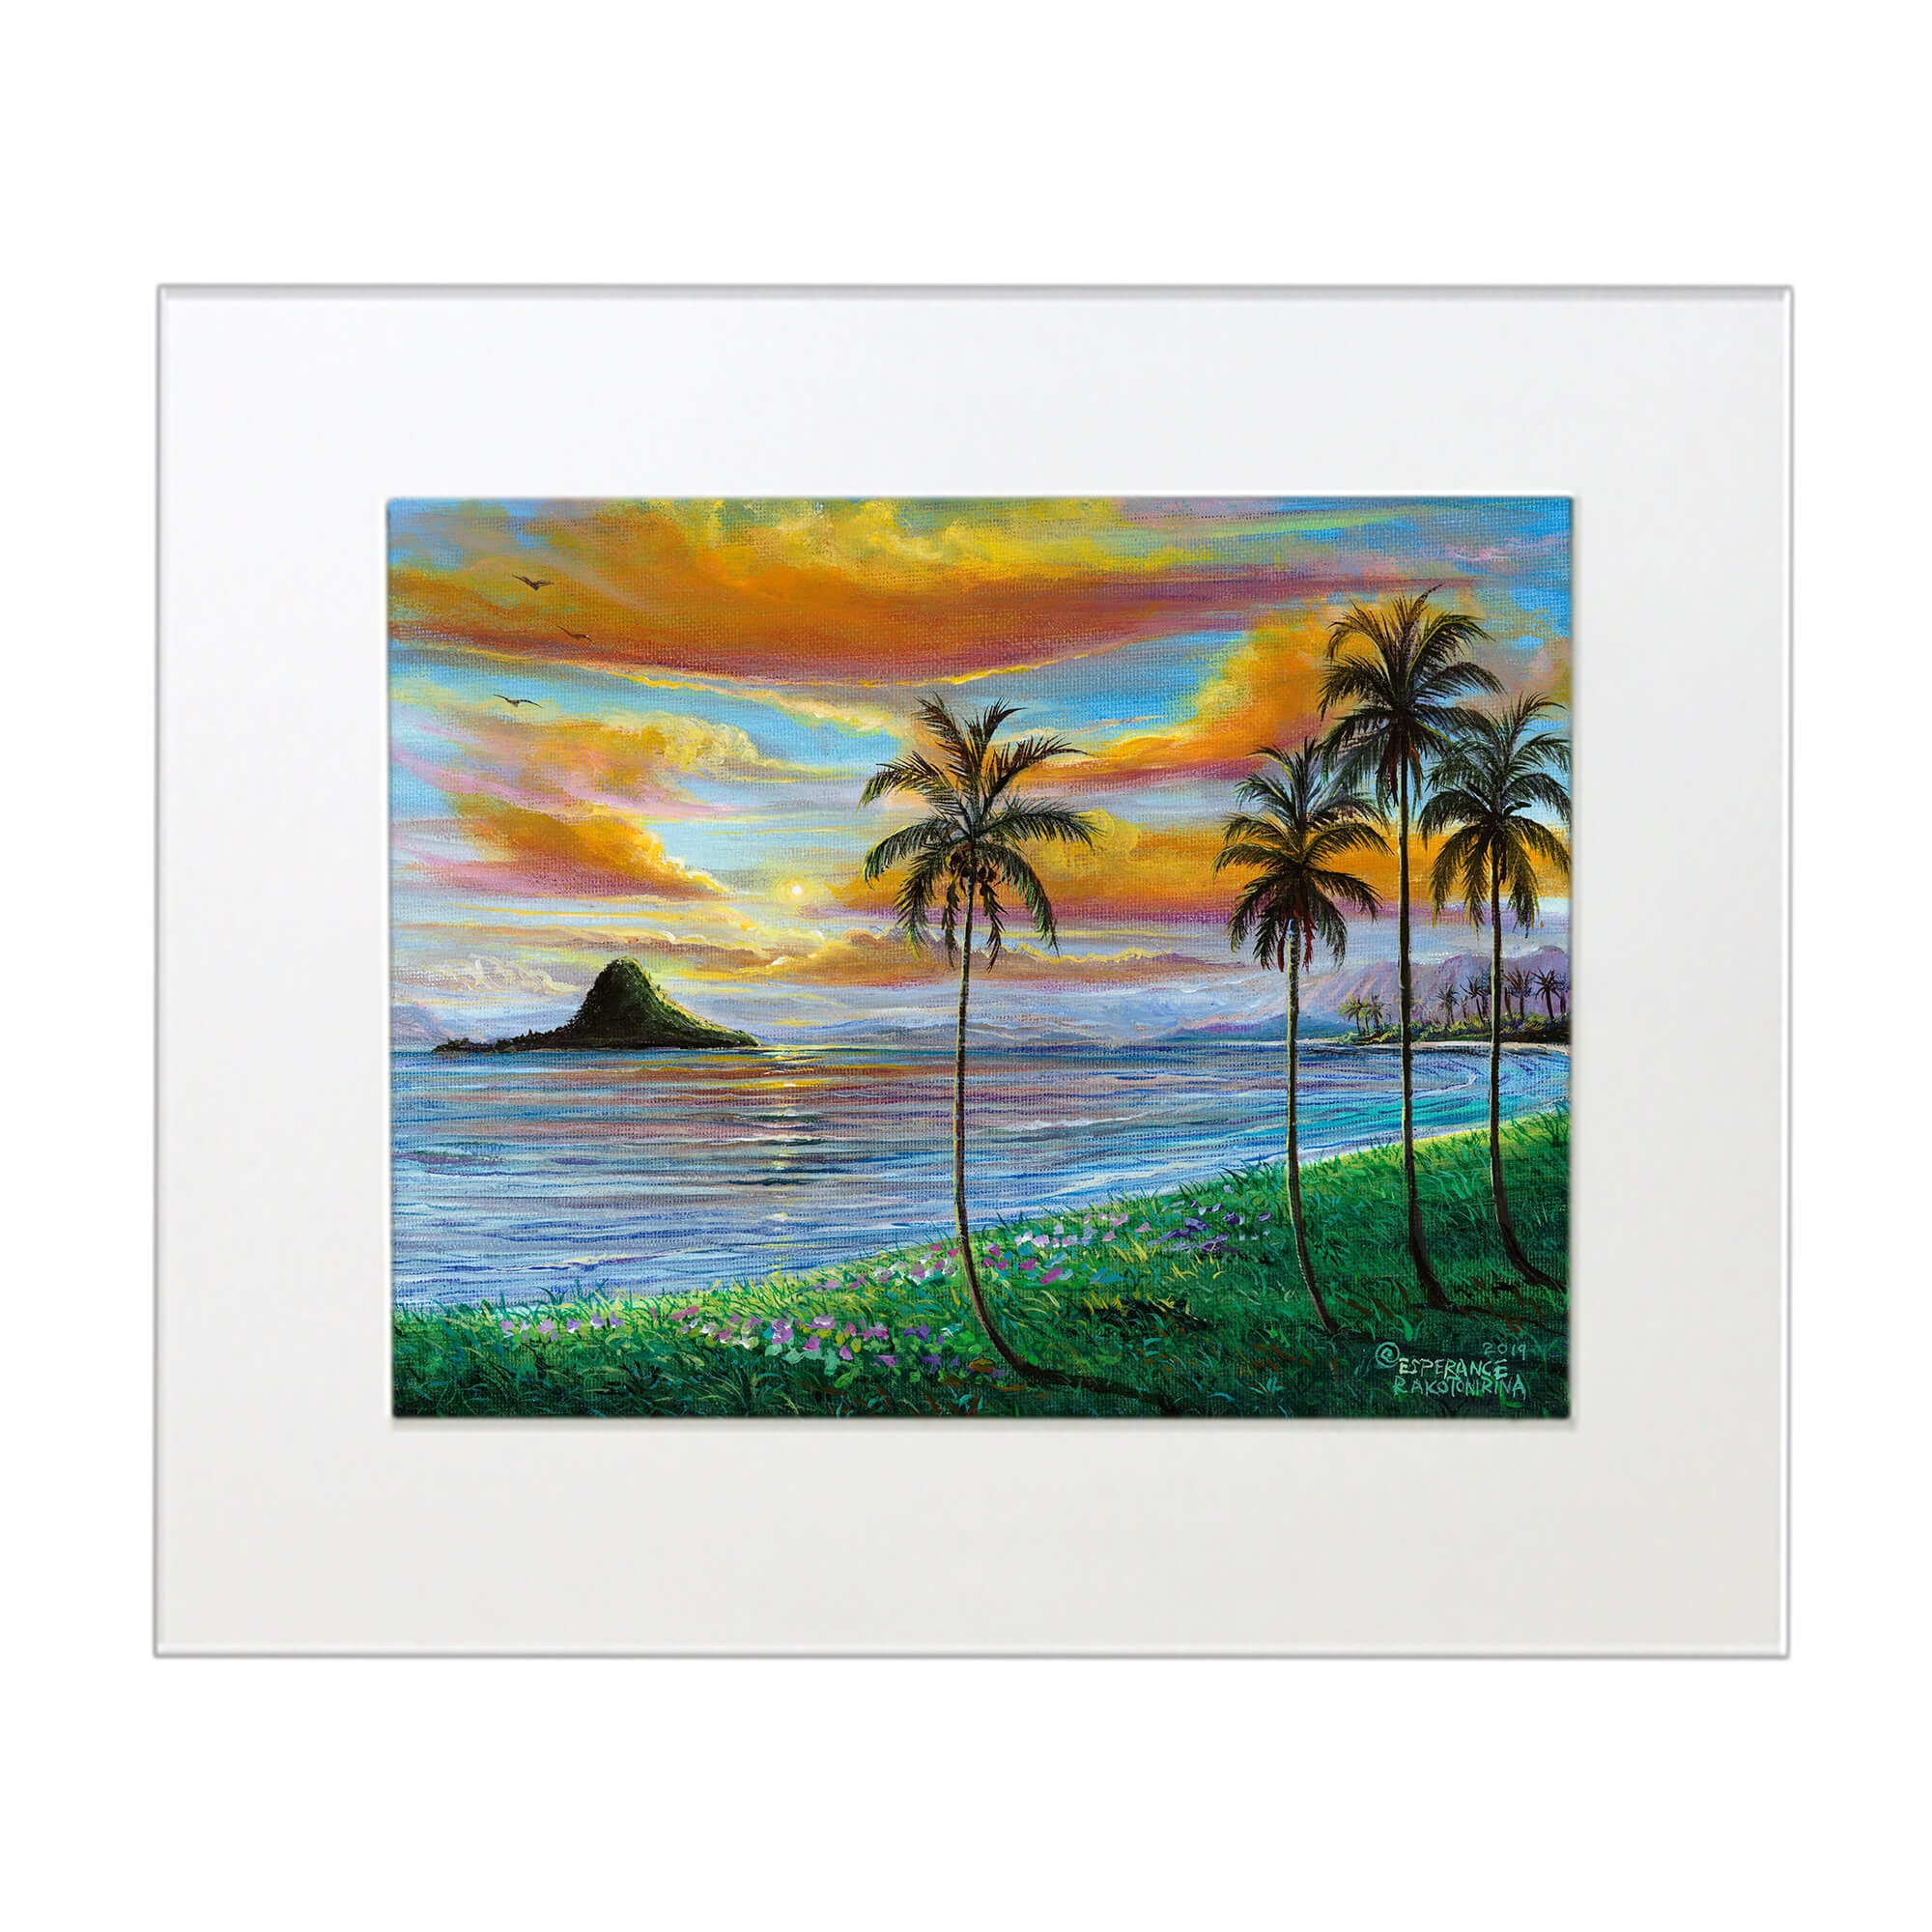 Matted art print Illustrating an island with palm trees  by hawaii artist Esperance Rakotonirina